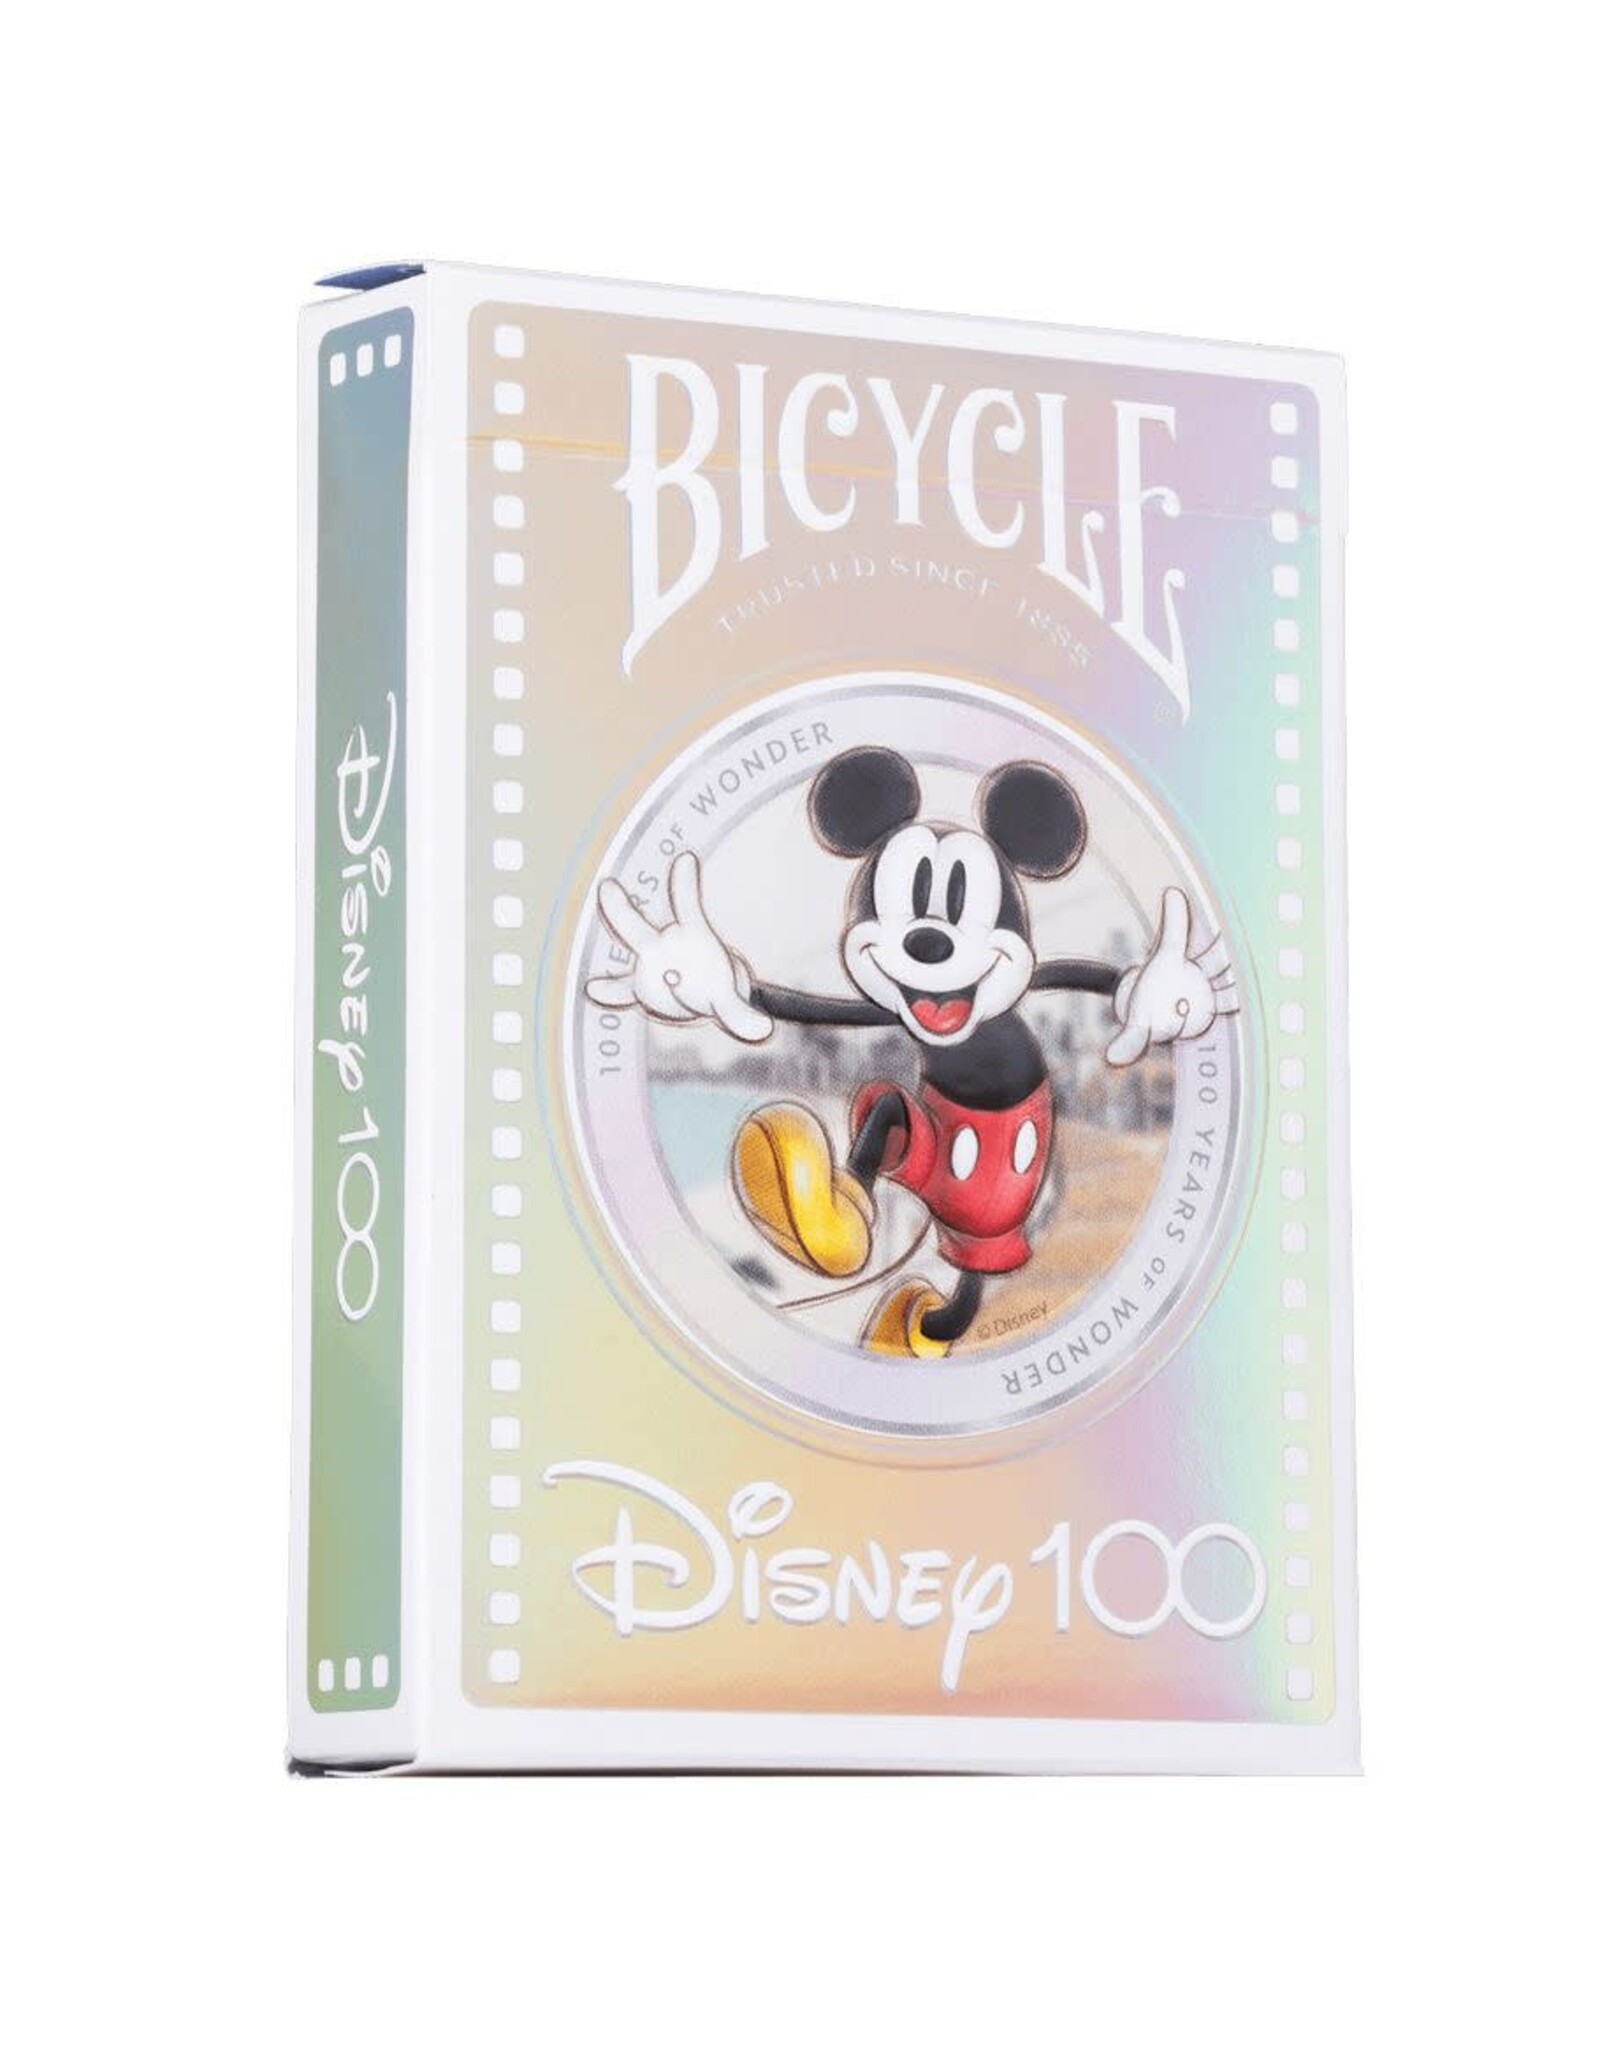 Bicycle Playing Cards:  Disney 100